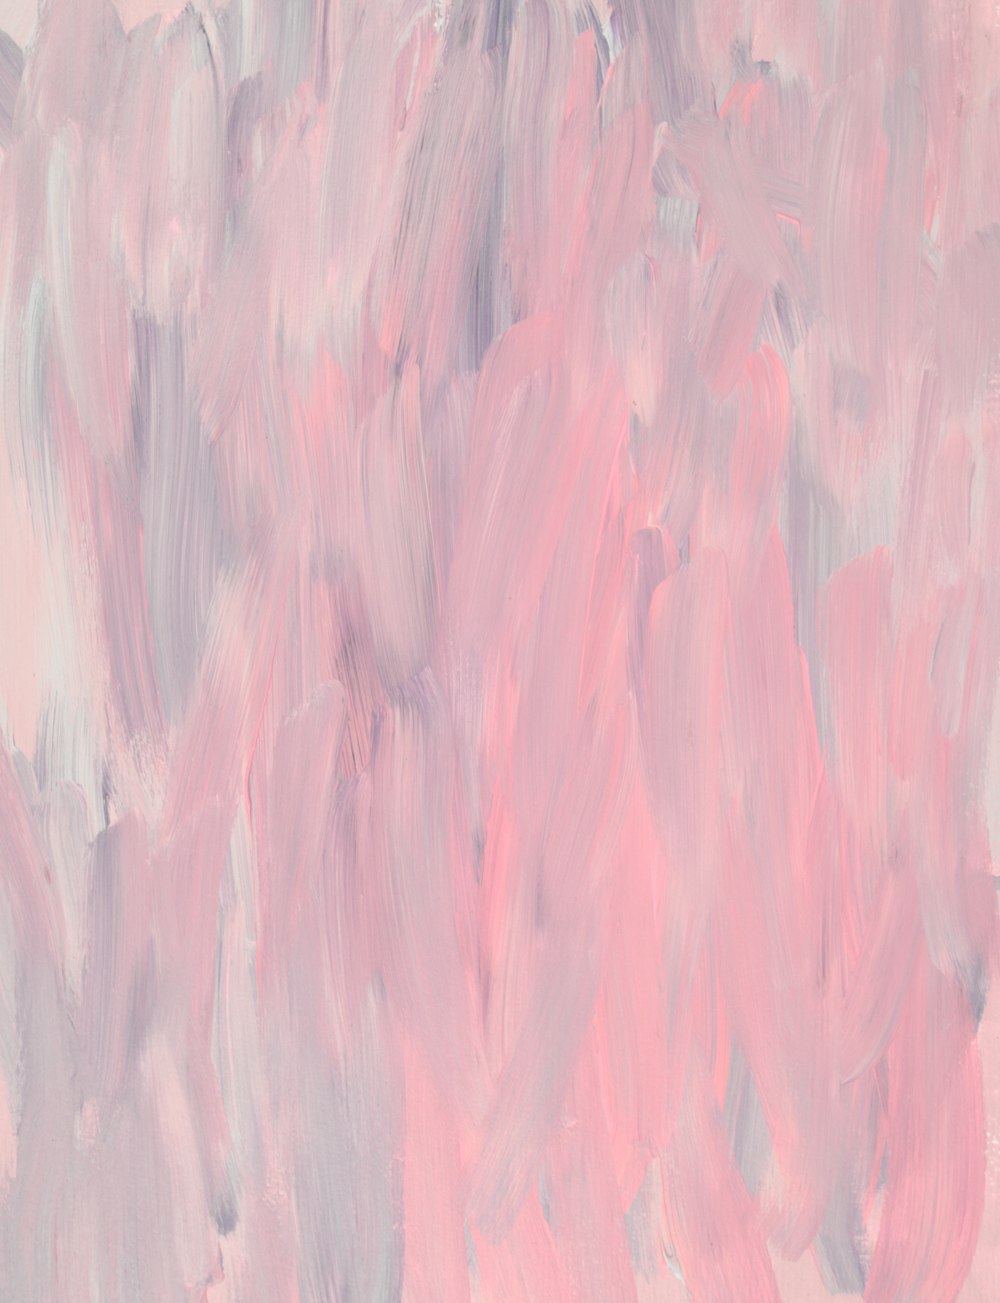 peinture abstraite rose et blanche